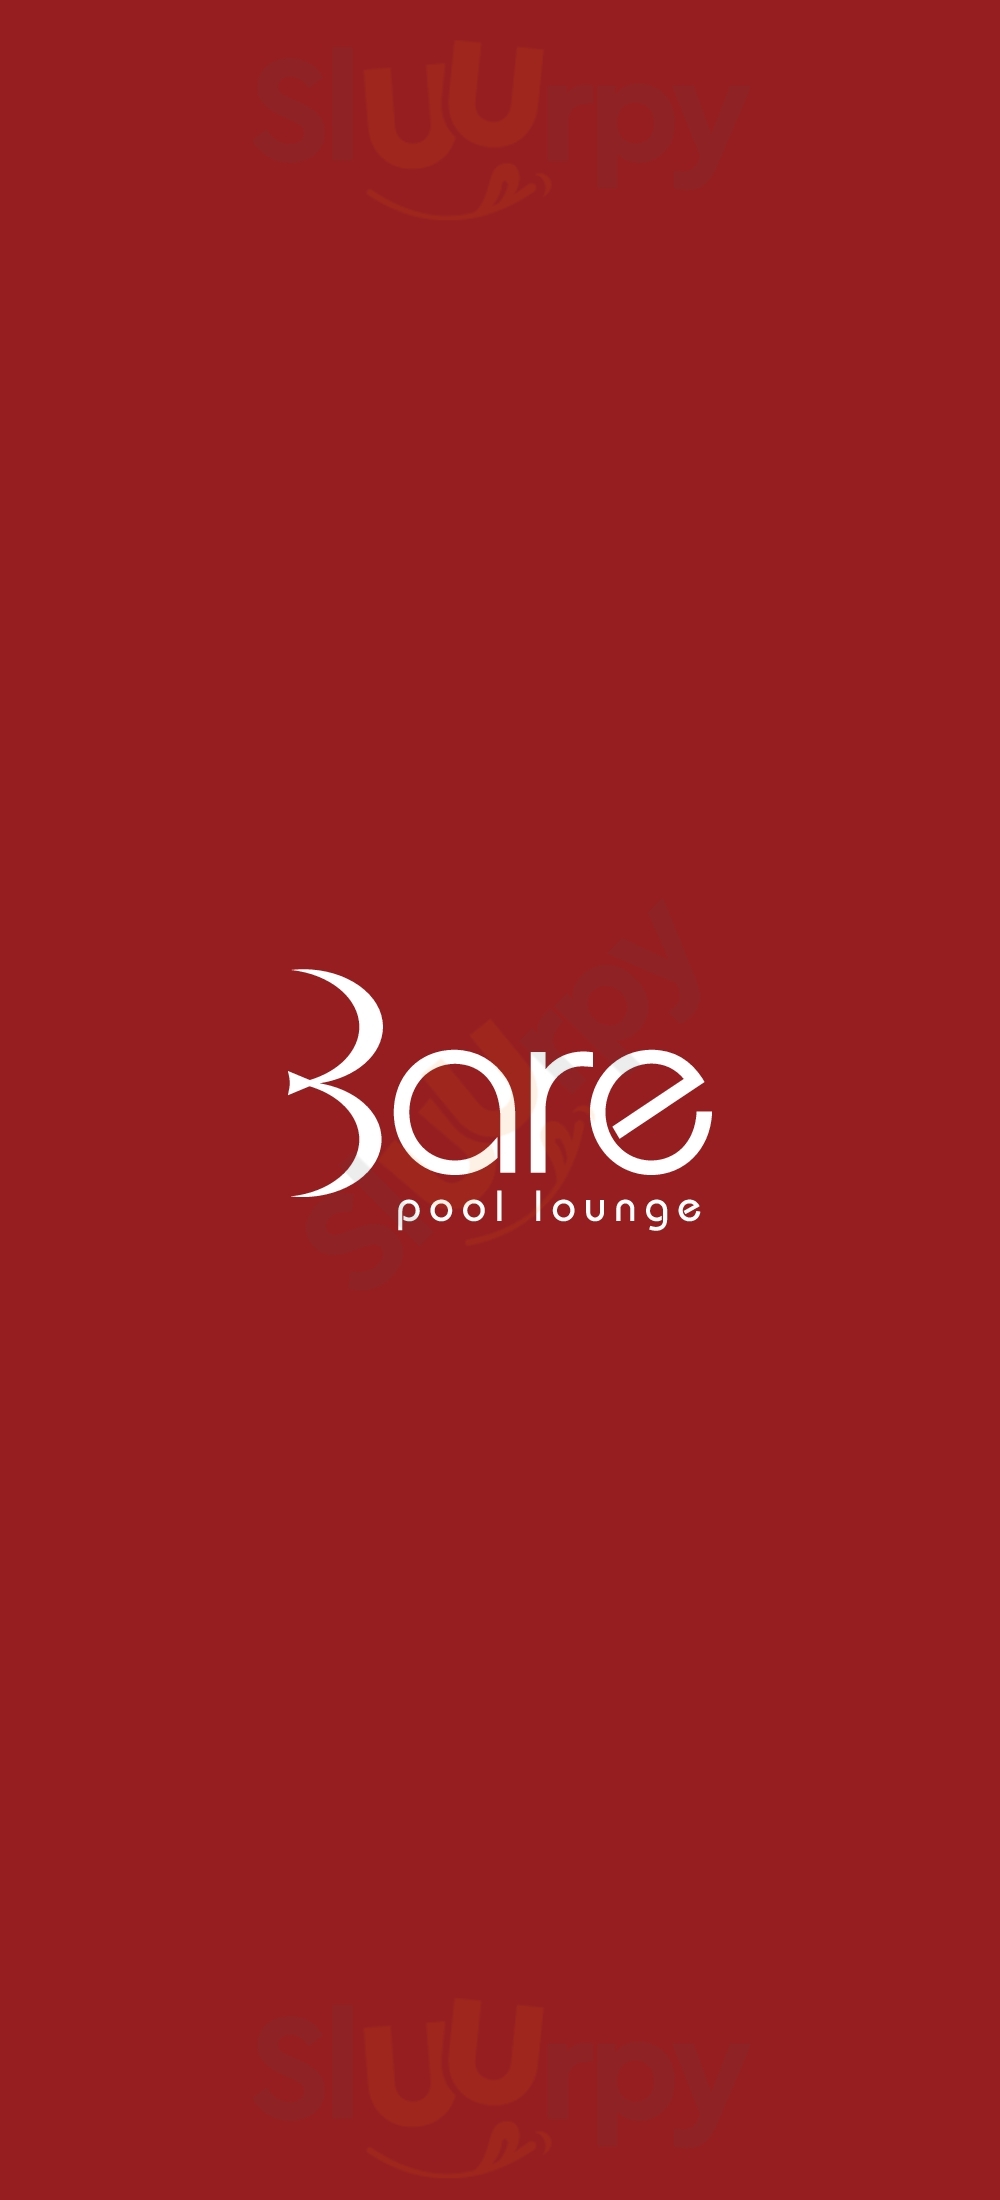 Bare Pool Lounge Las Vegas Menu - 1